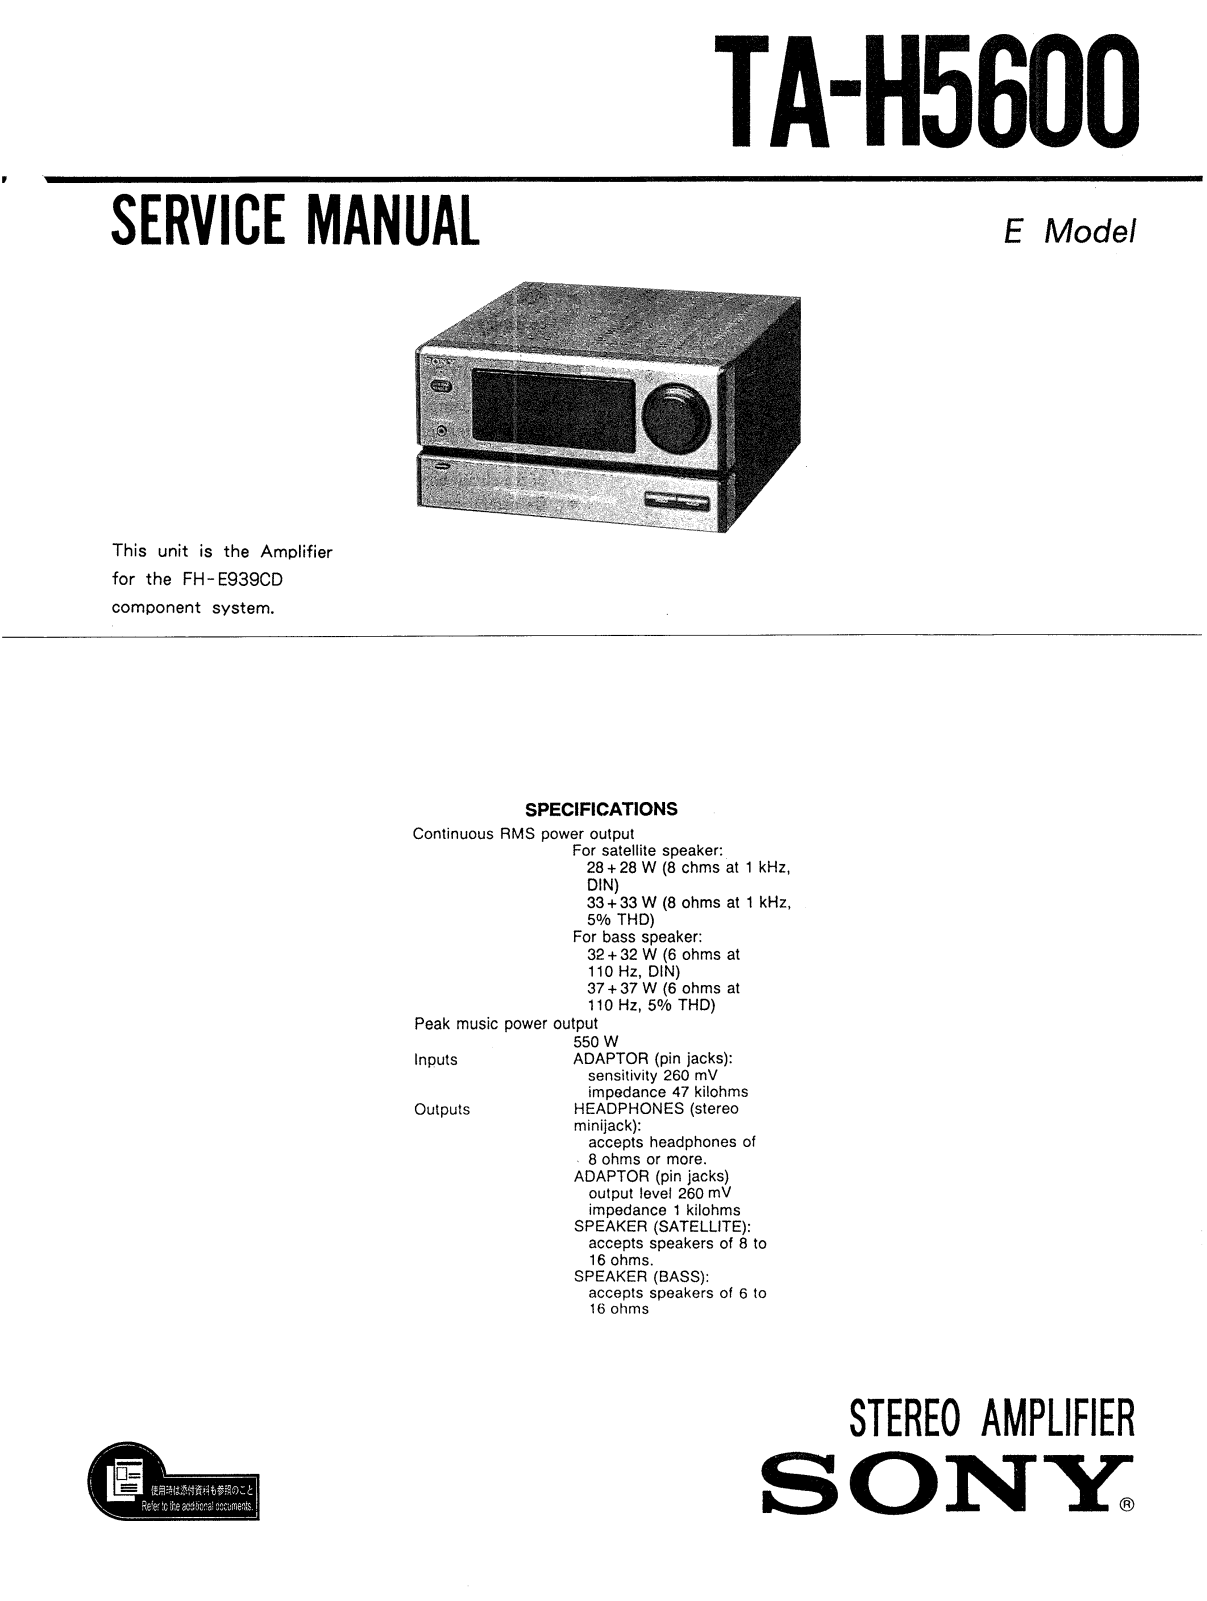 Sony TAH-5600 Service manual